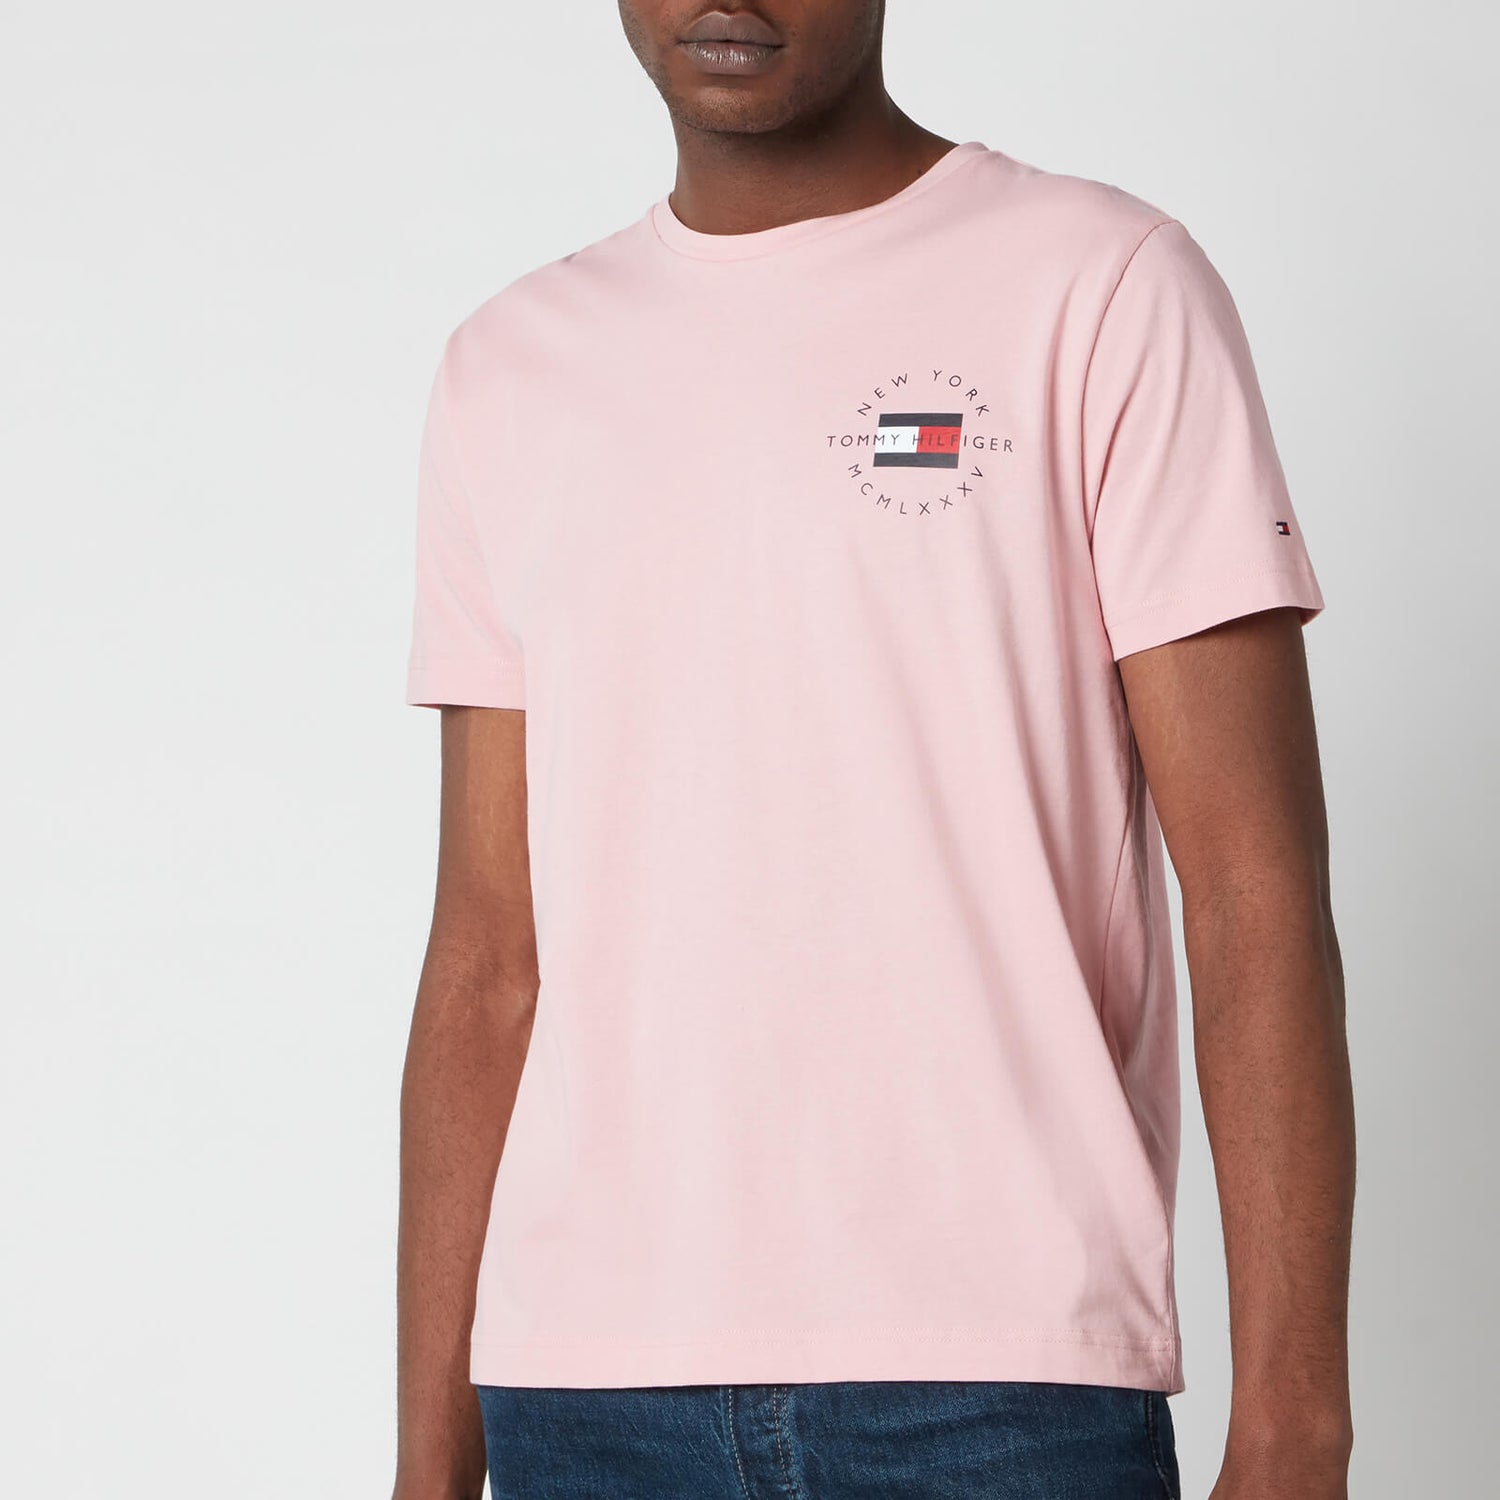 Tommy Hilfiger Men's Chest Circle Corporation T-Shirt - Glacier Pink